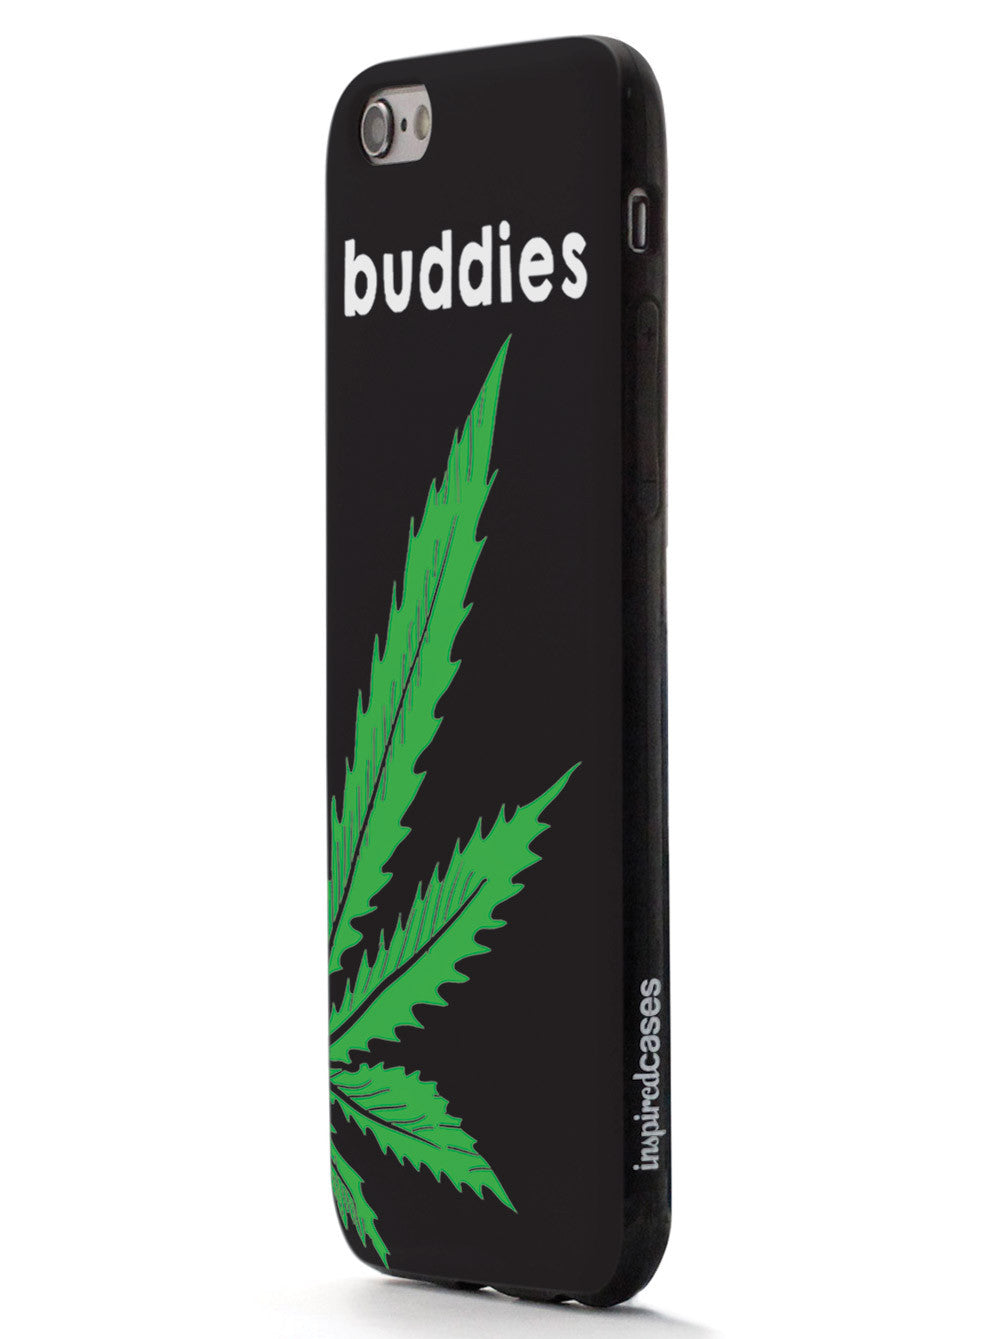 Smoking BUDDIES - BUDDIES Case